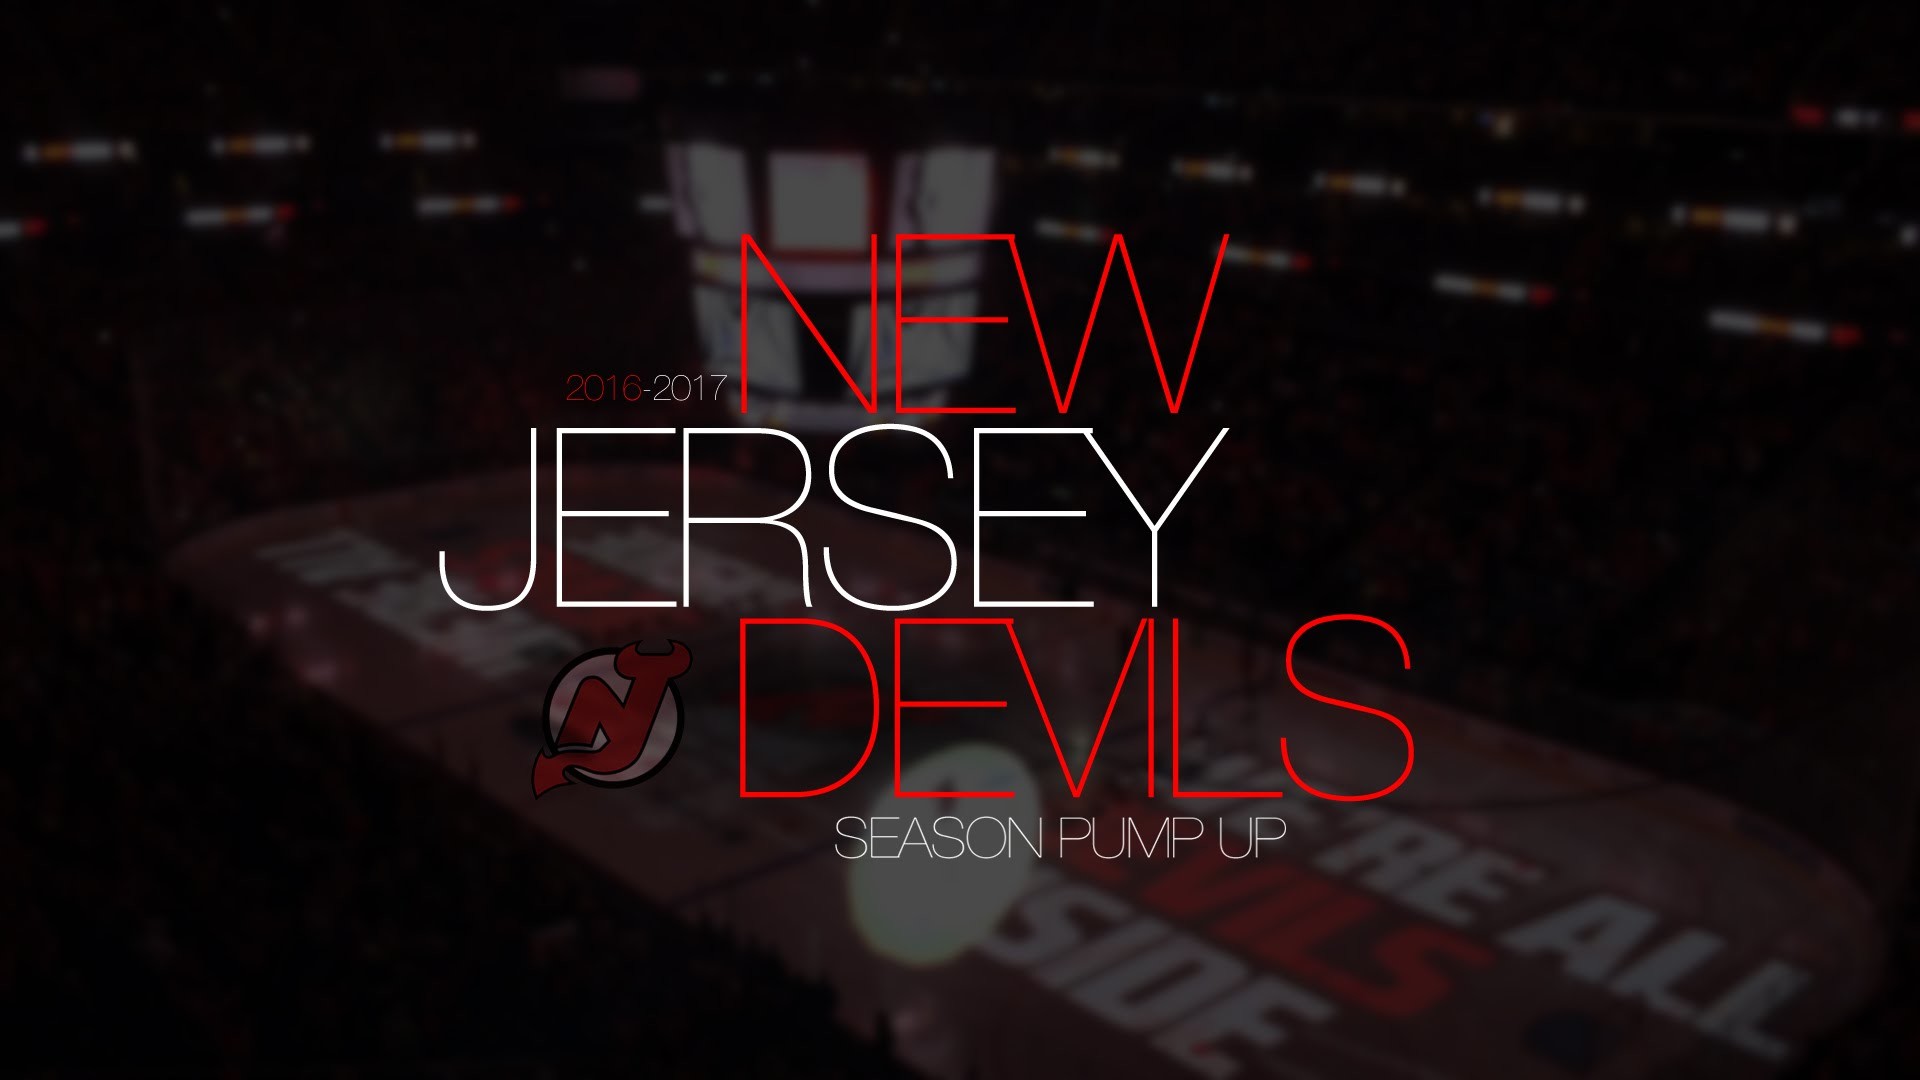 New Jersey Devils 2016-2017 Season Pump Up [HD]